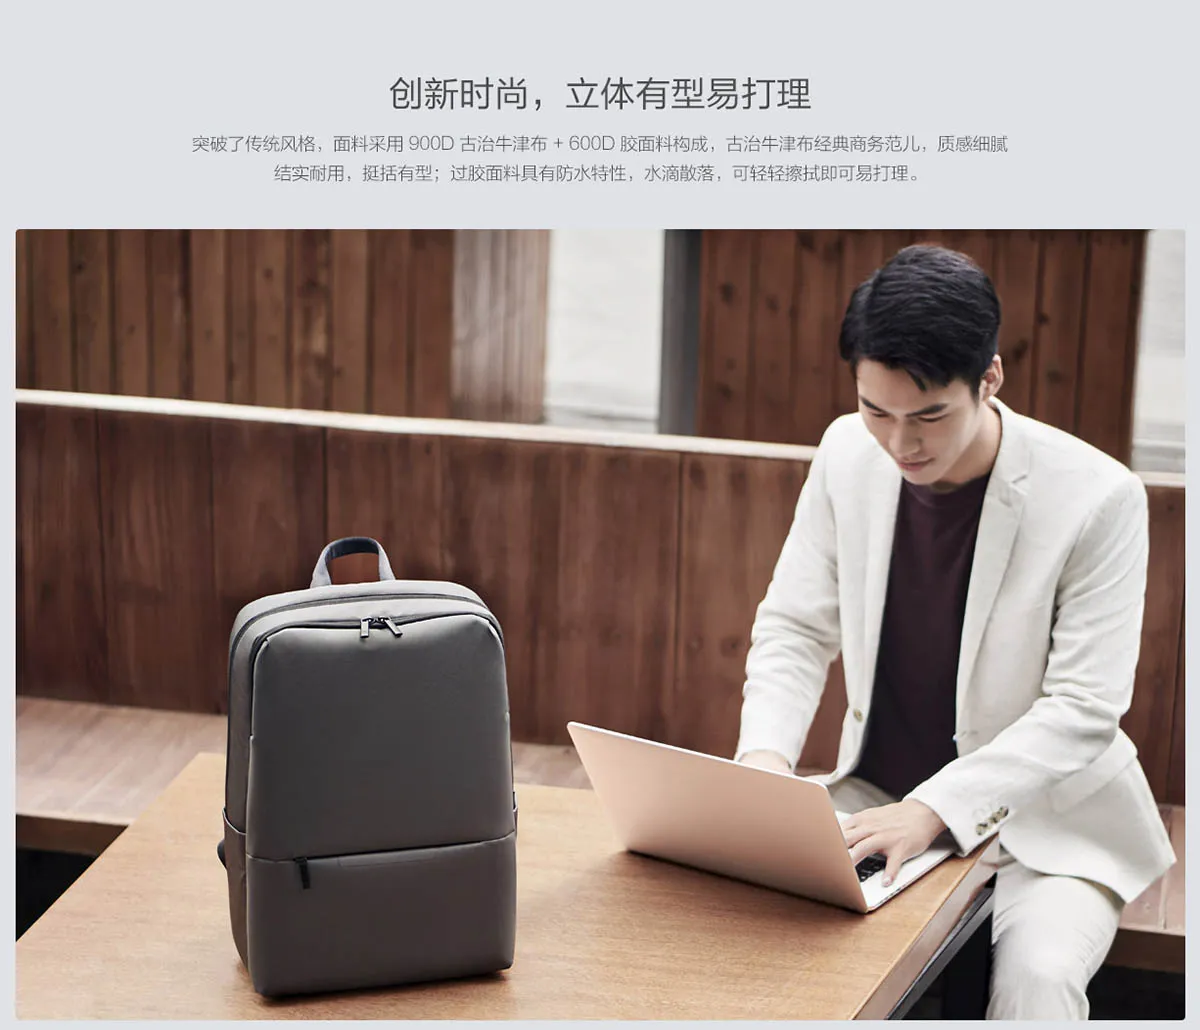 xiaomi classic business backpack 2 black 08